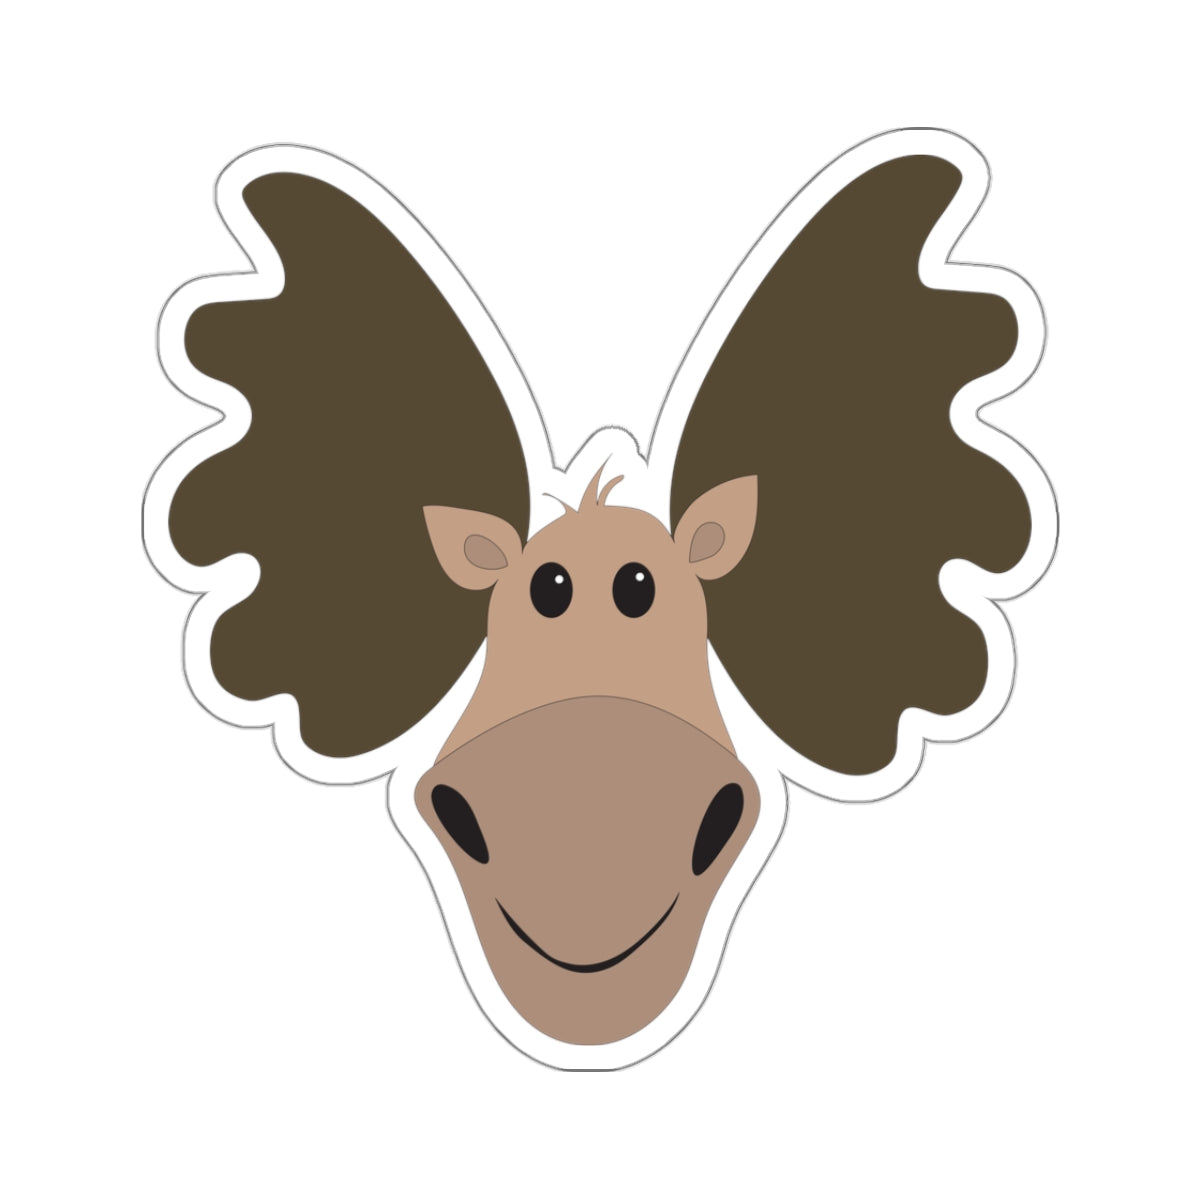 The Moose Sticker